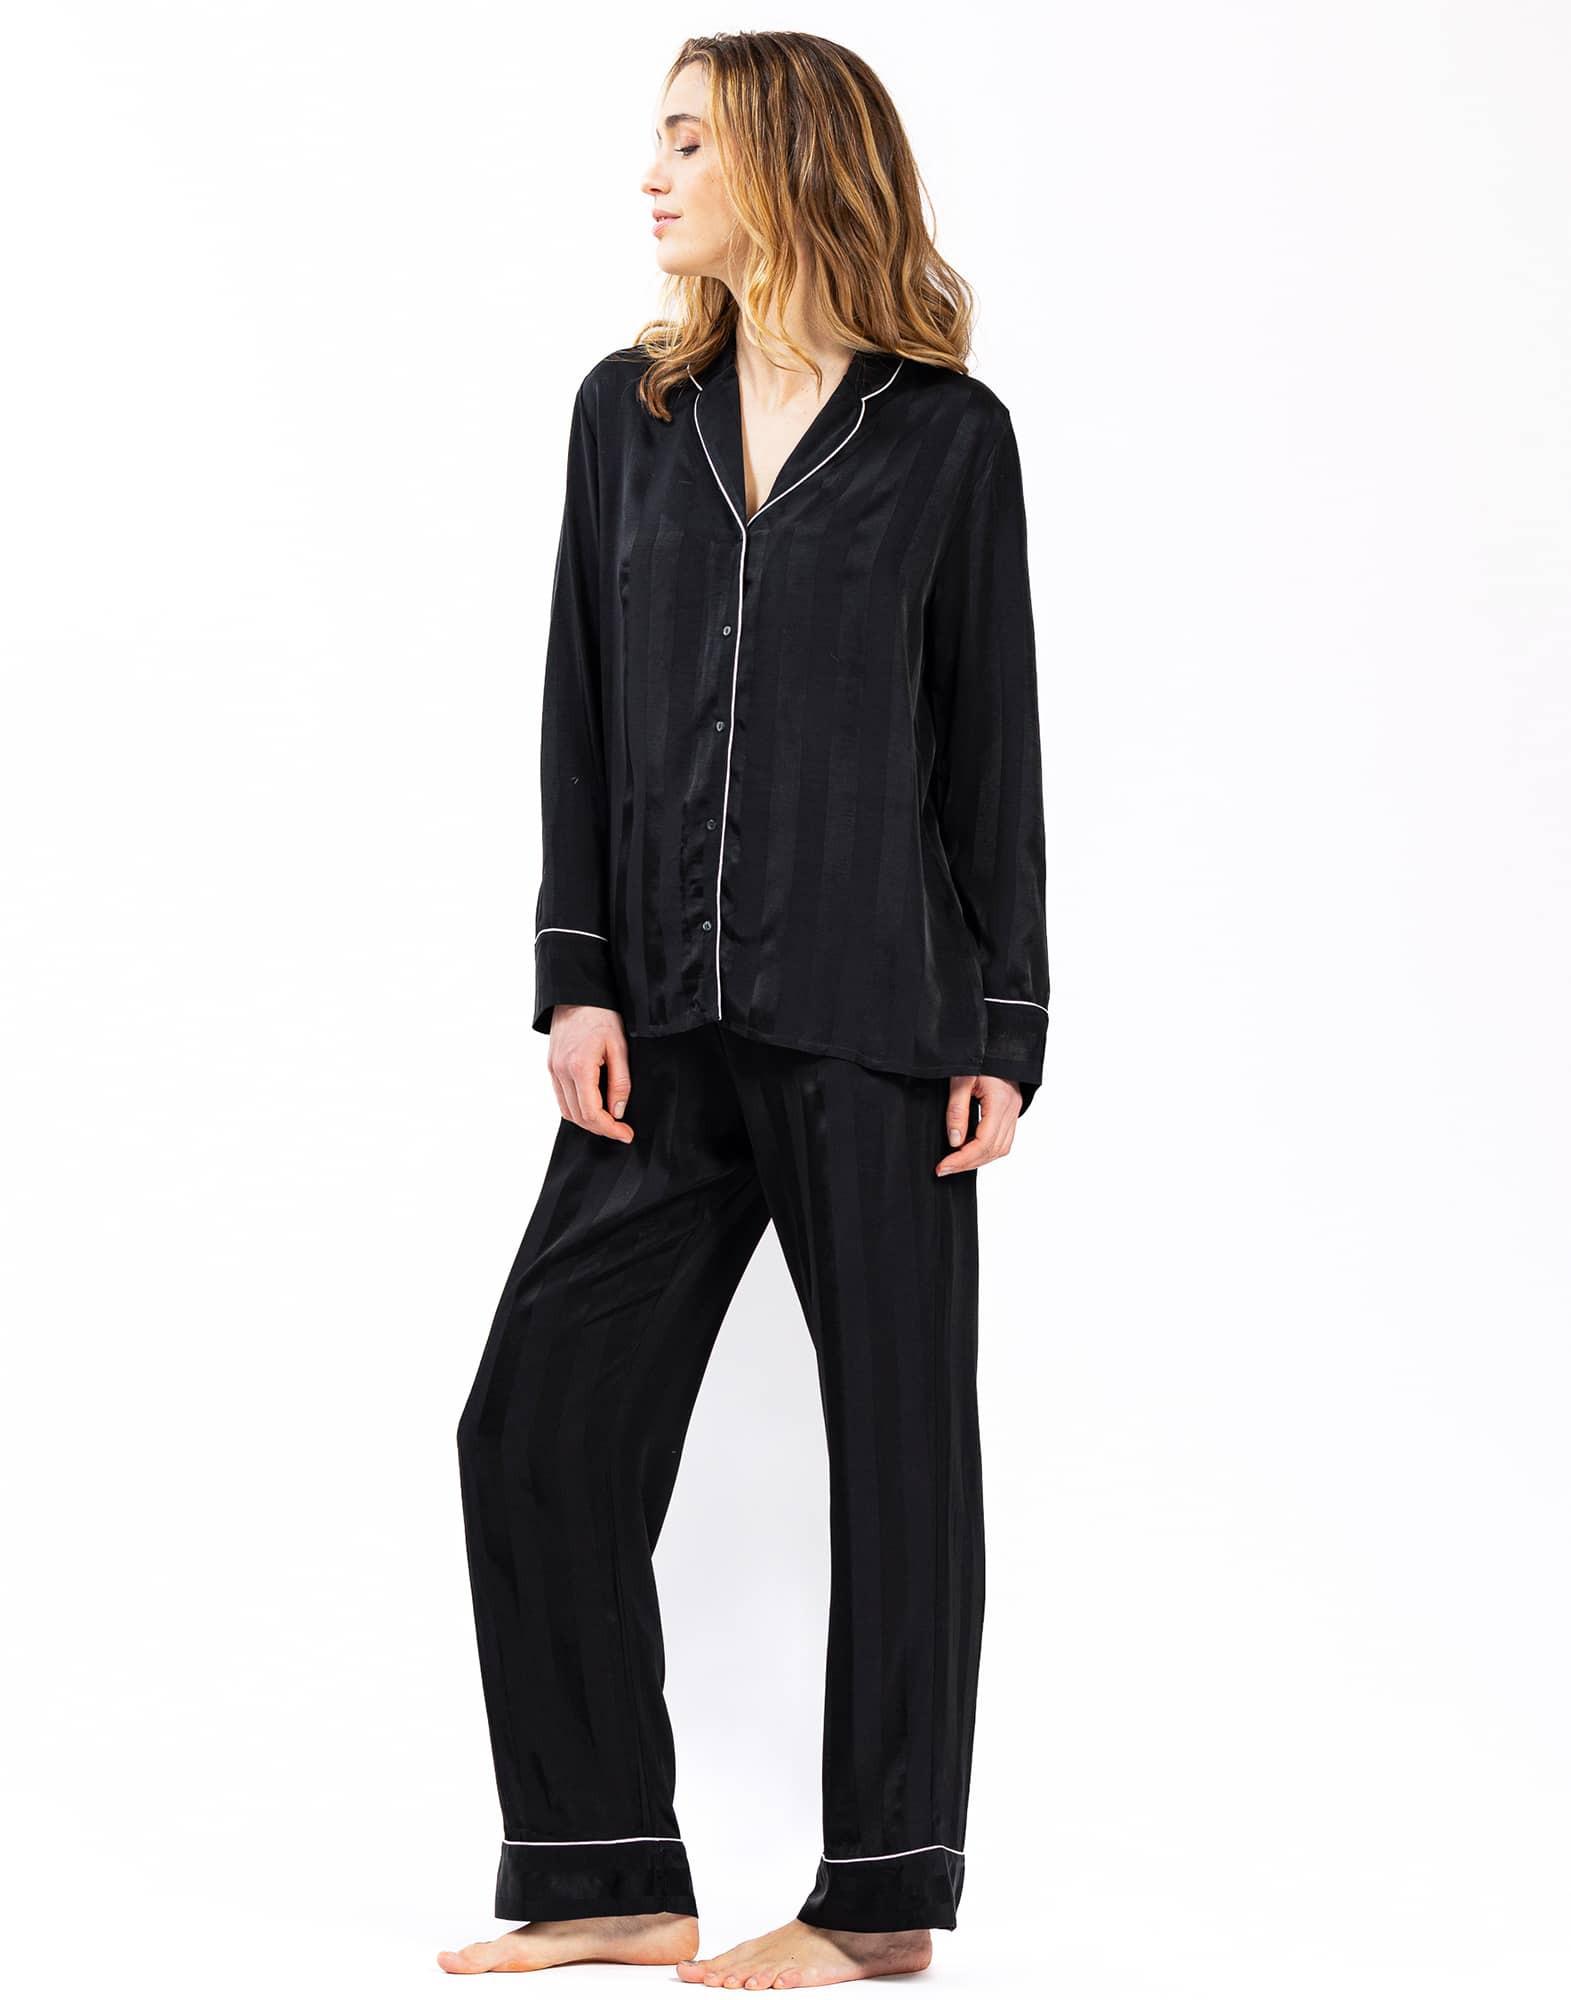 Buttoned pyjamas GABRIELLE 606 made from black viscose jacquard